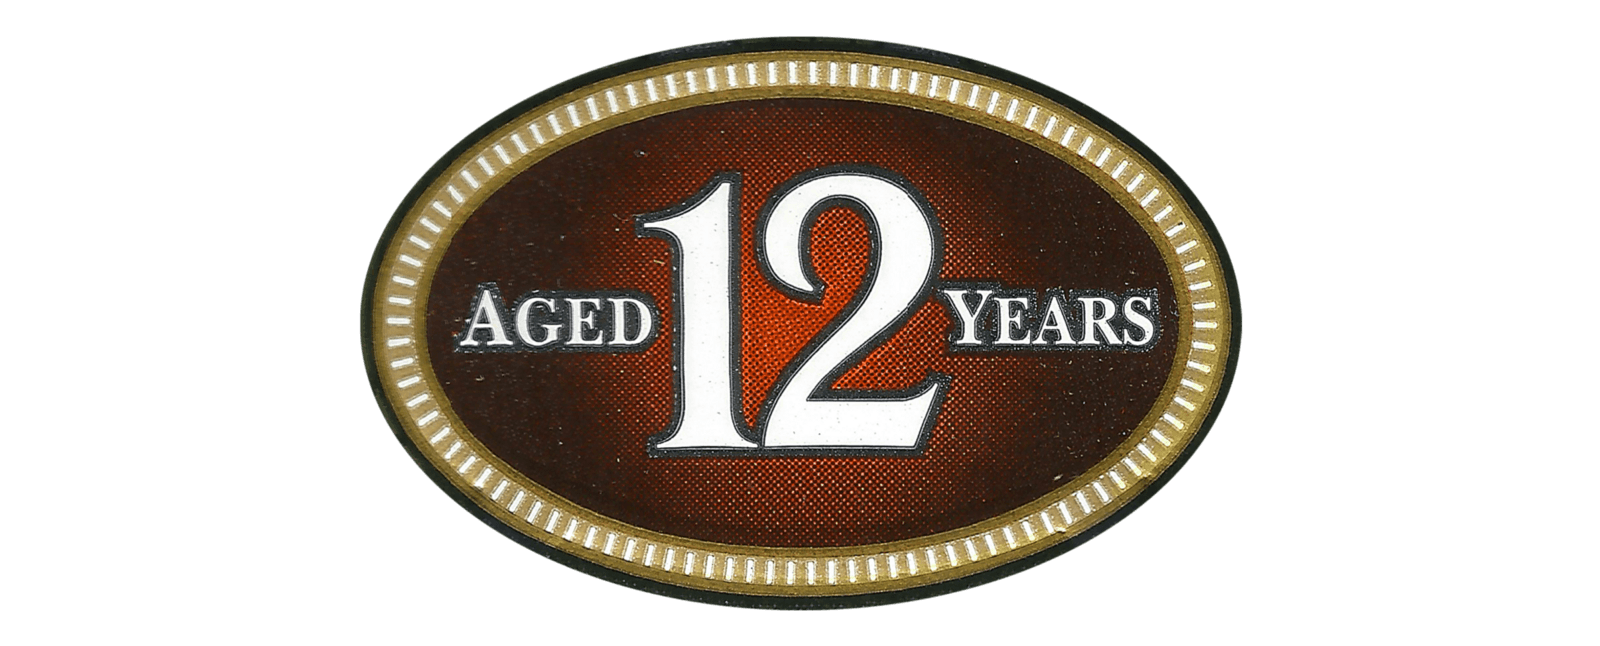 Aged 12 Years Logo - Aged 12 Years